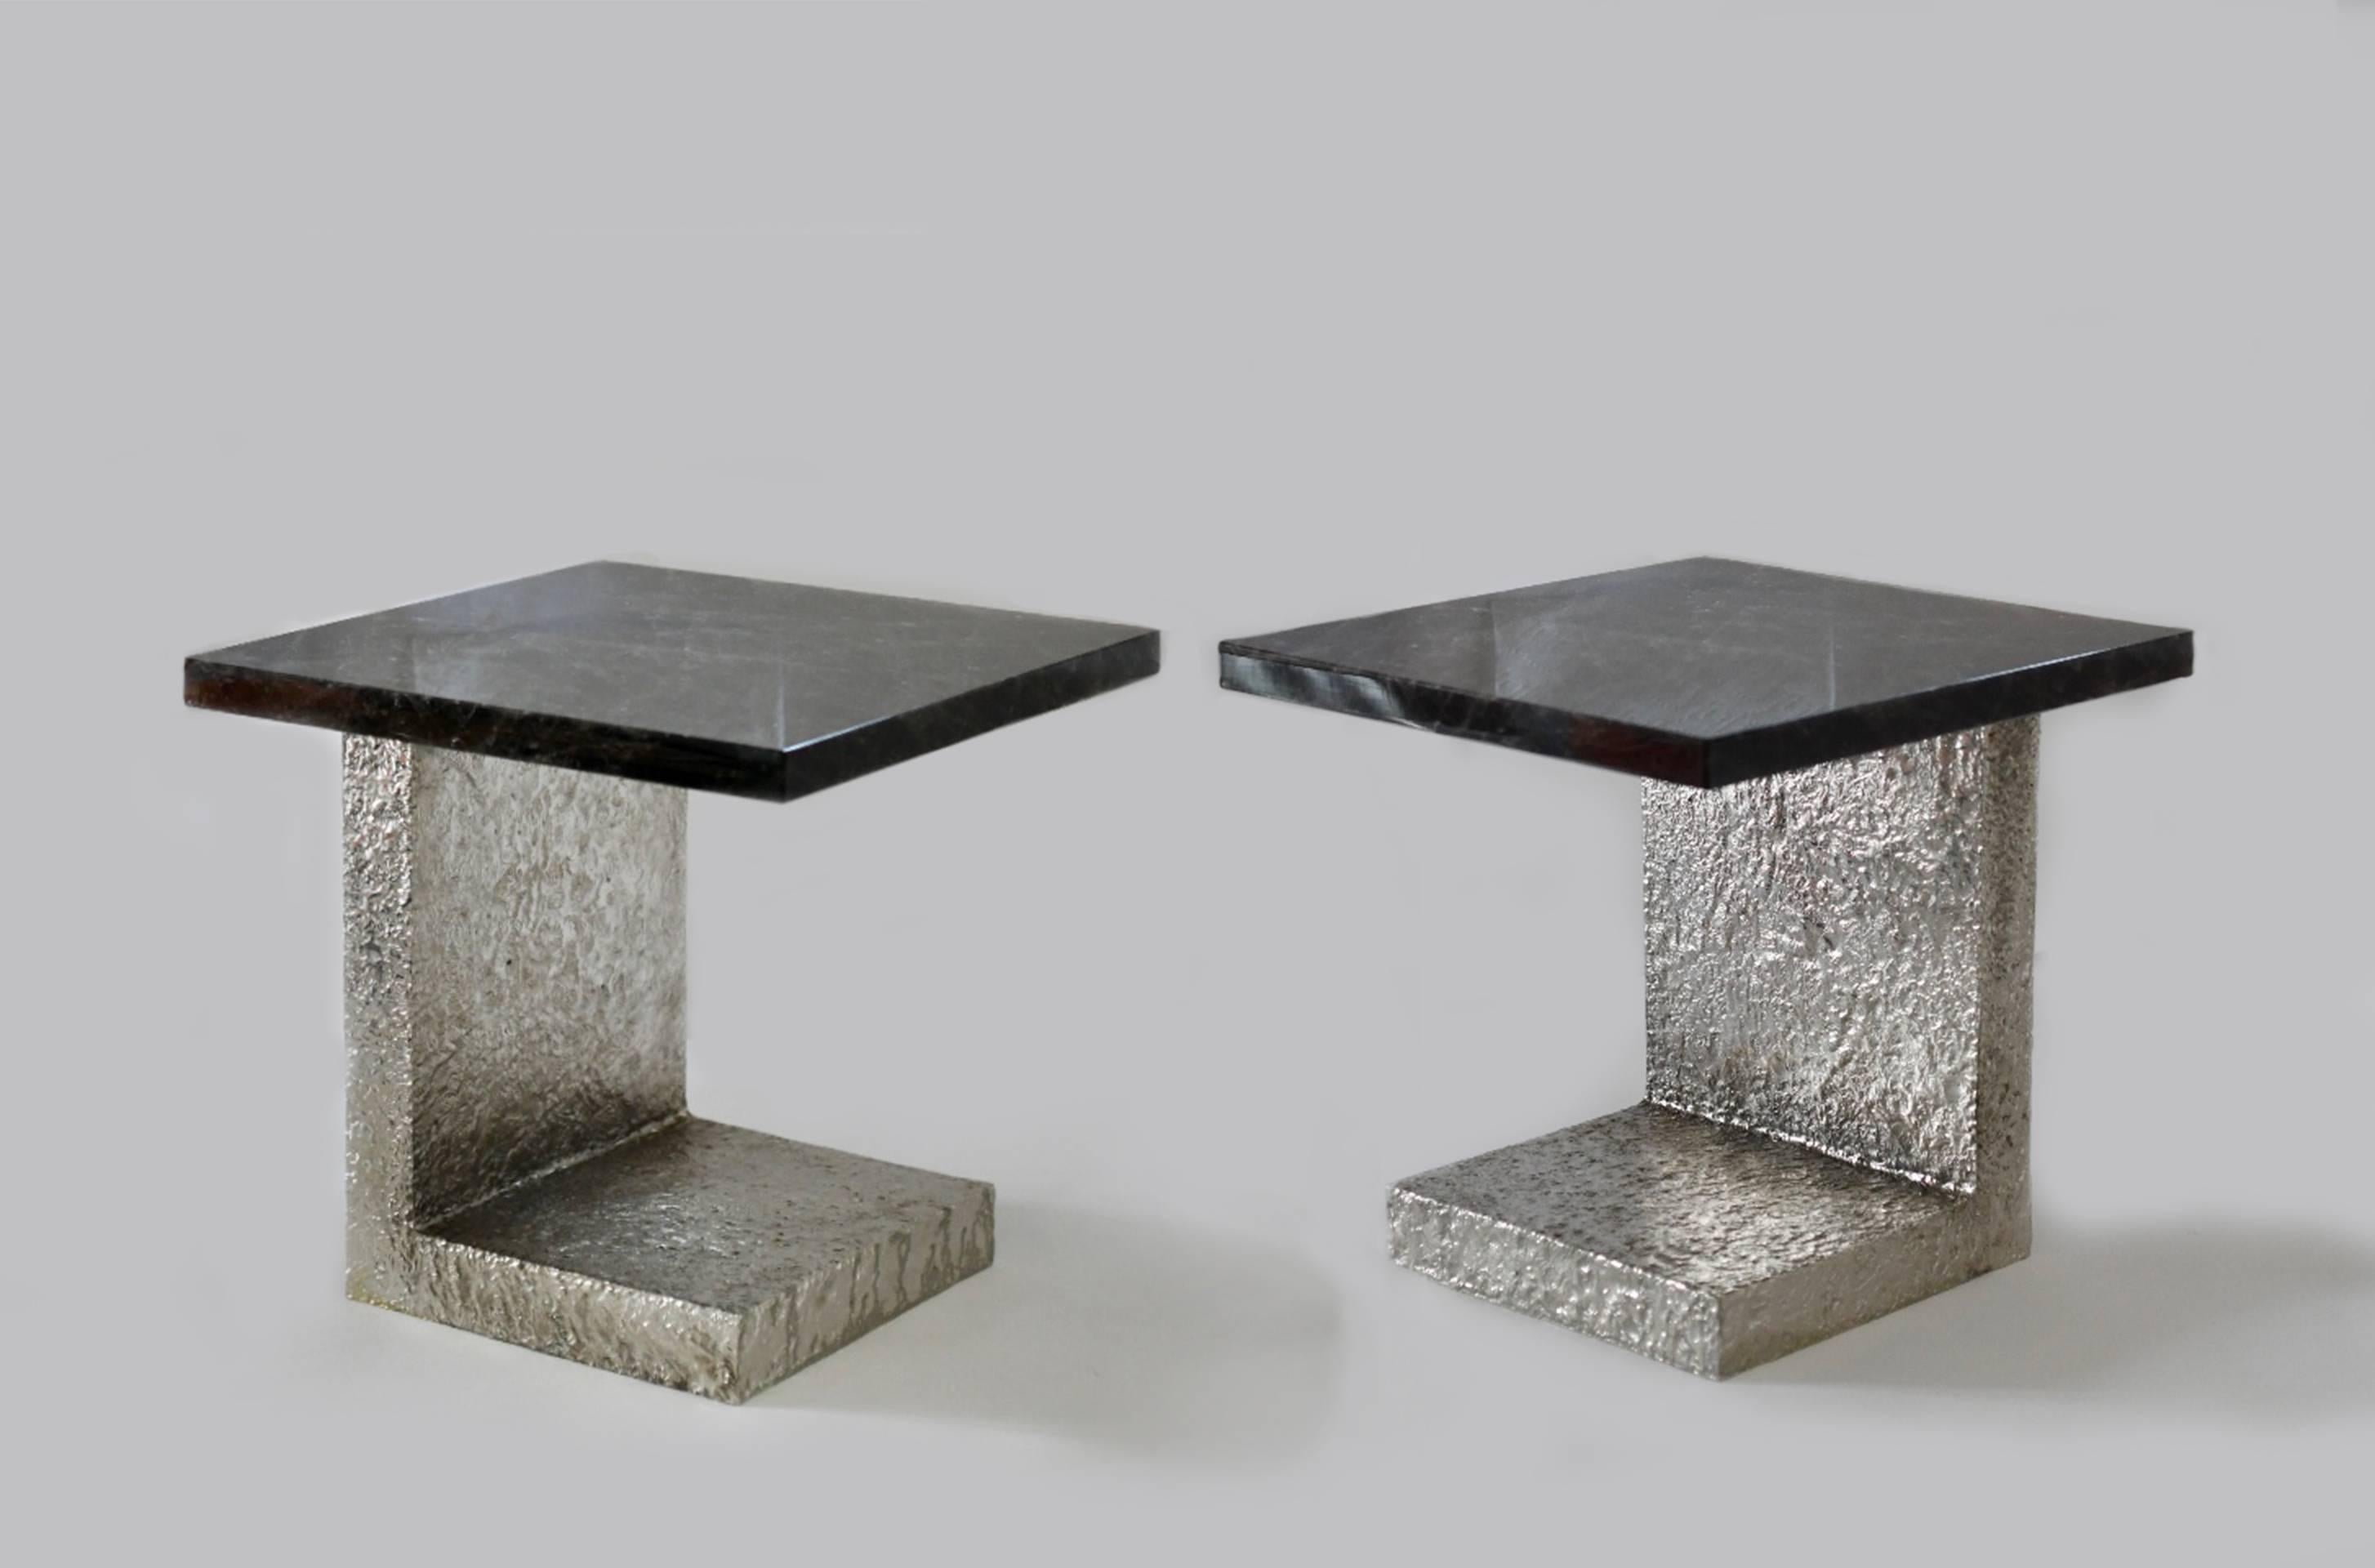 luxury smoky dark rock crystal quartz side table with nickel plating base, created by Phoenix Gallery (NYC).

